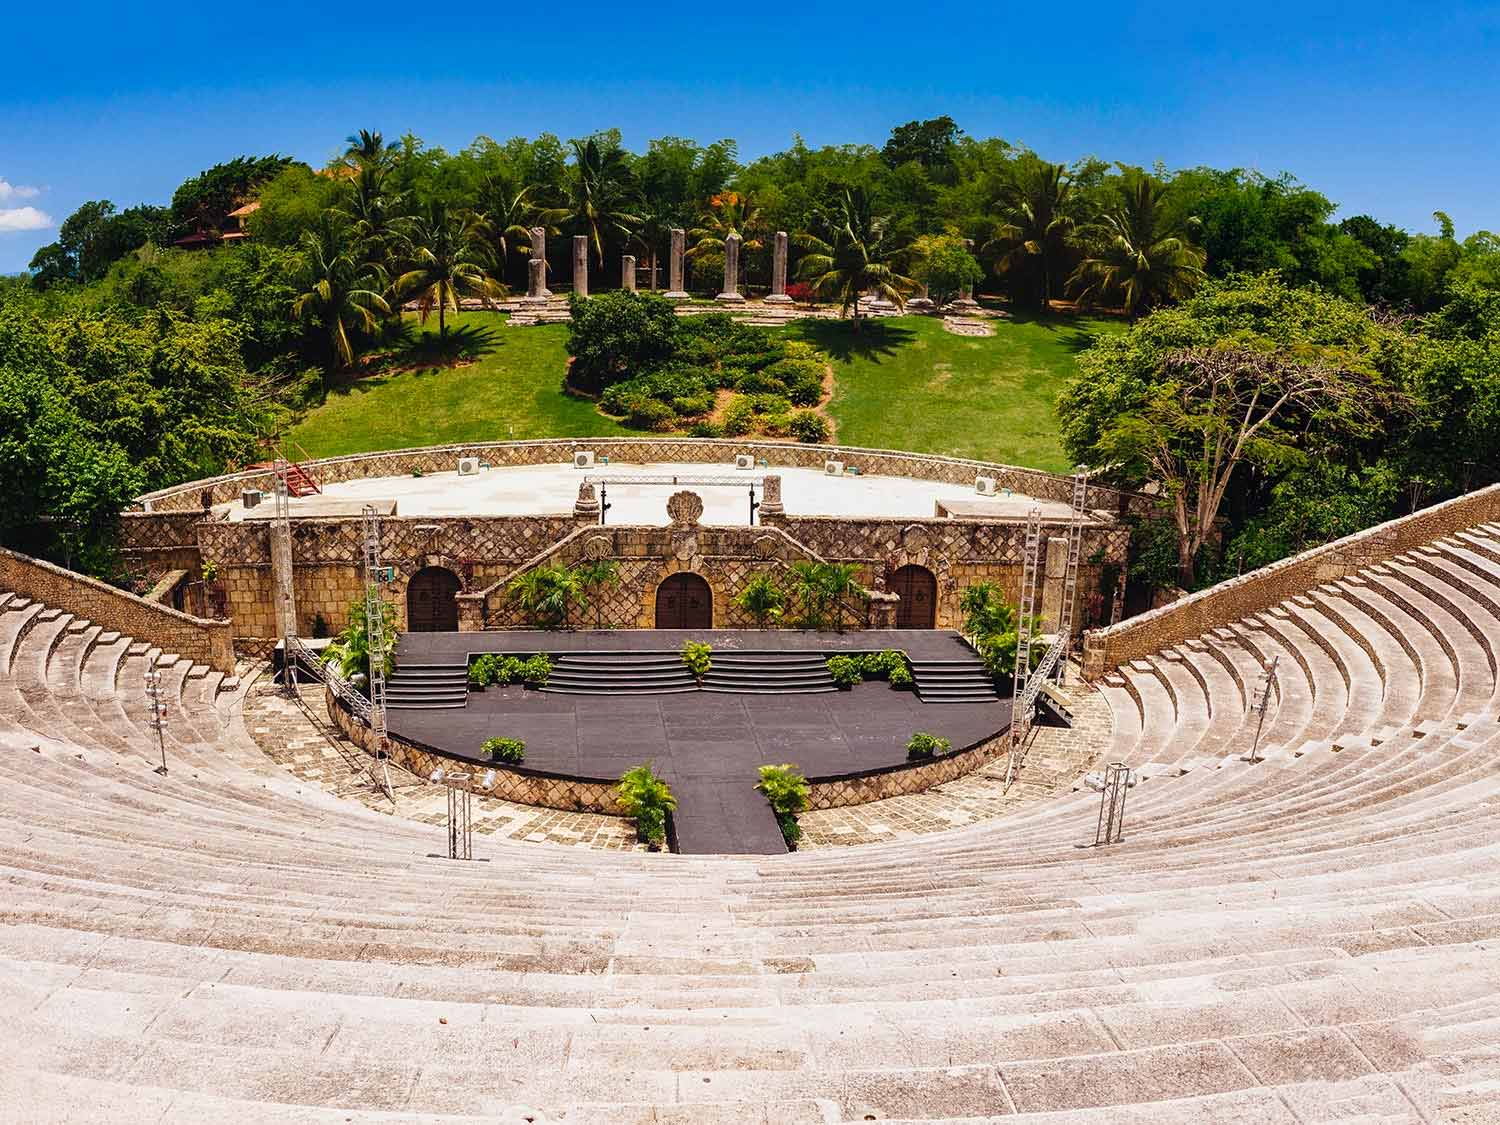 The 5,000-seat Grecian-style amphitheater at Altos de Chavon